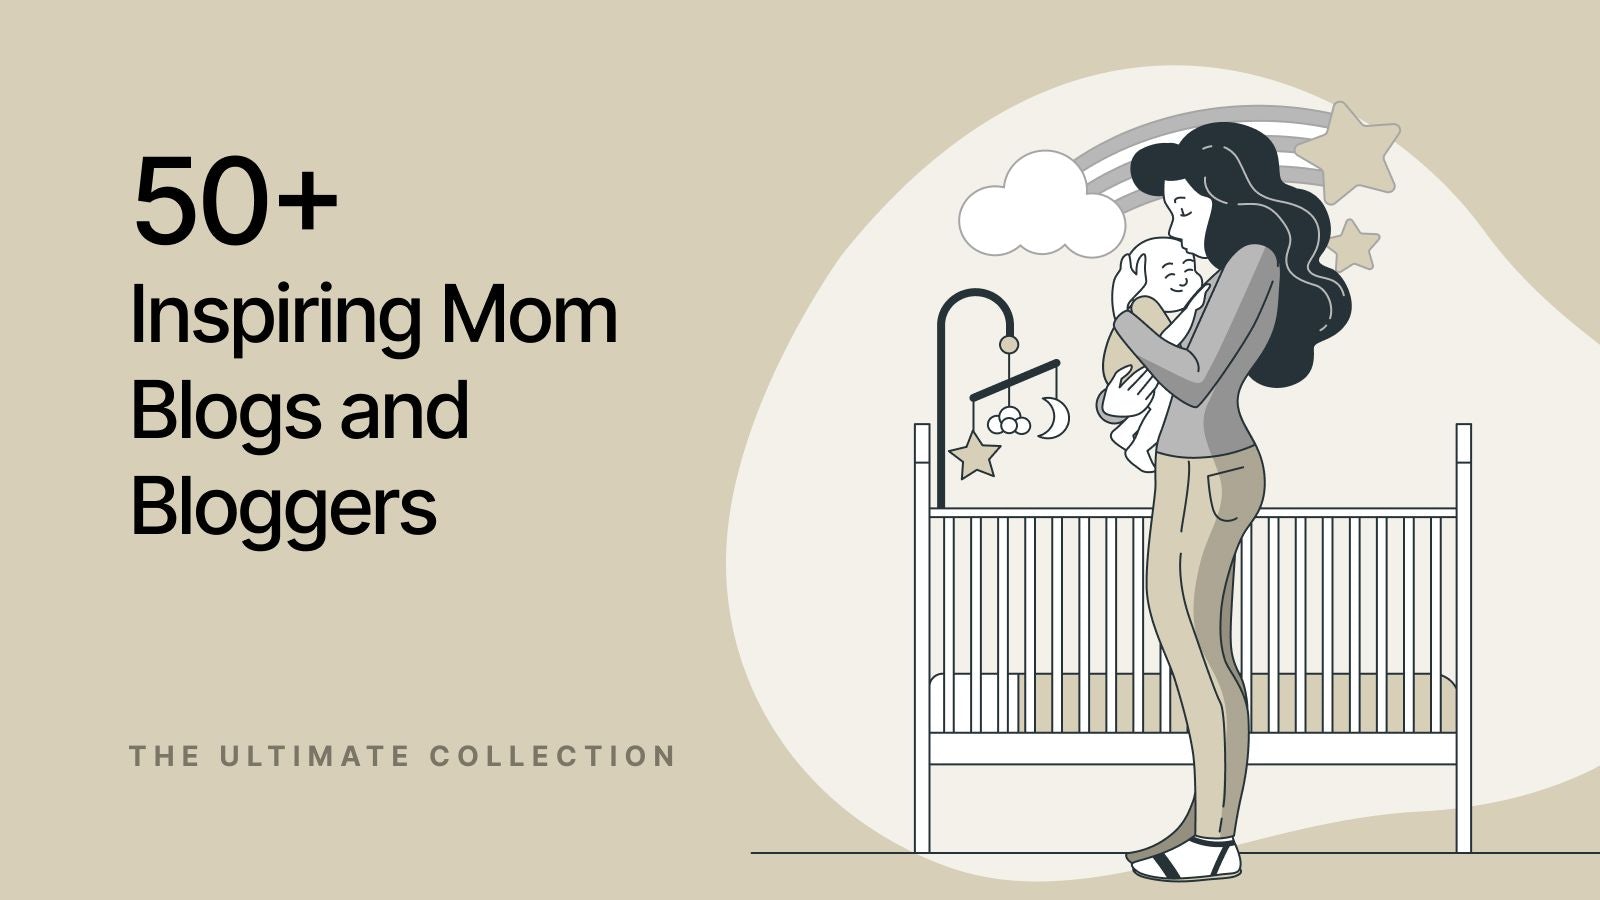 15 Best Baby Utensils, As Per Parenting Blogger In 2023